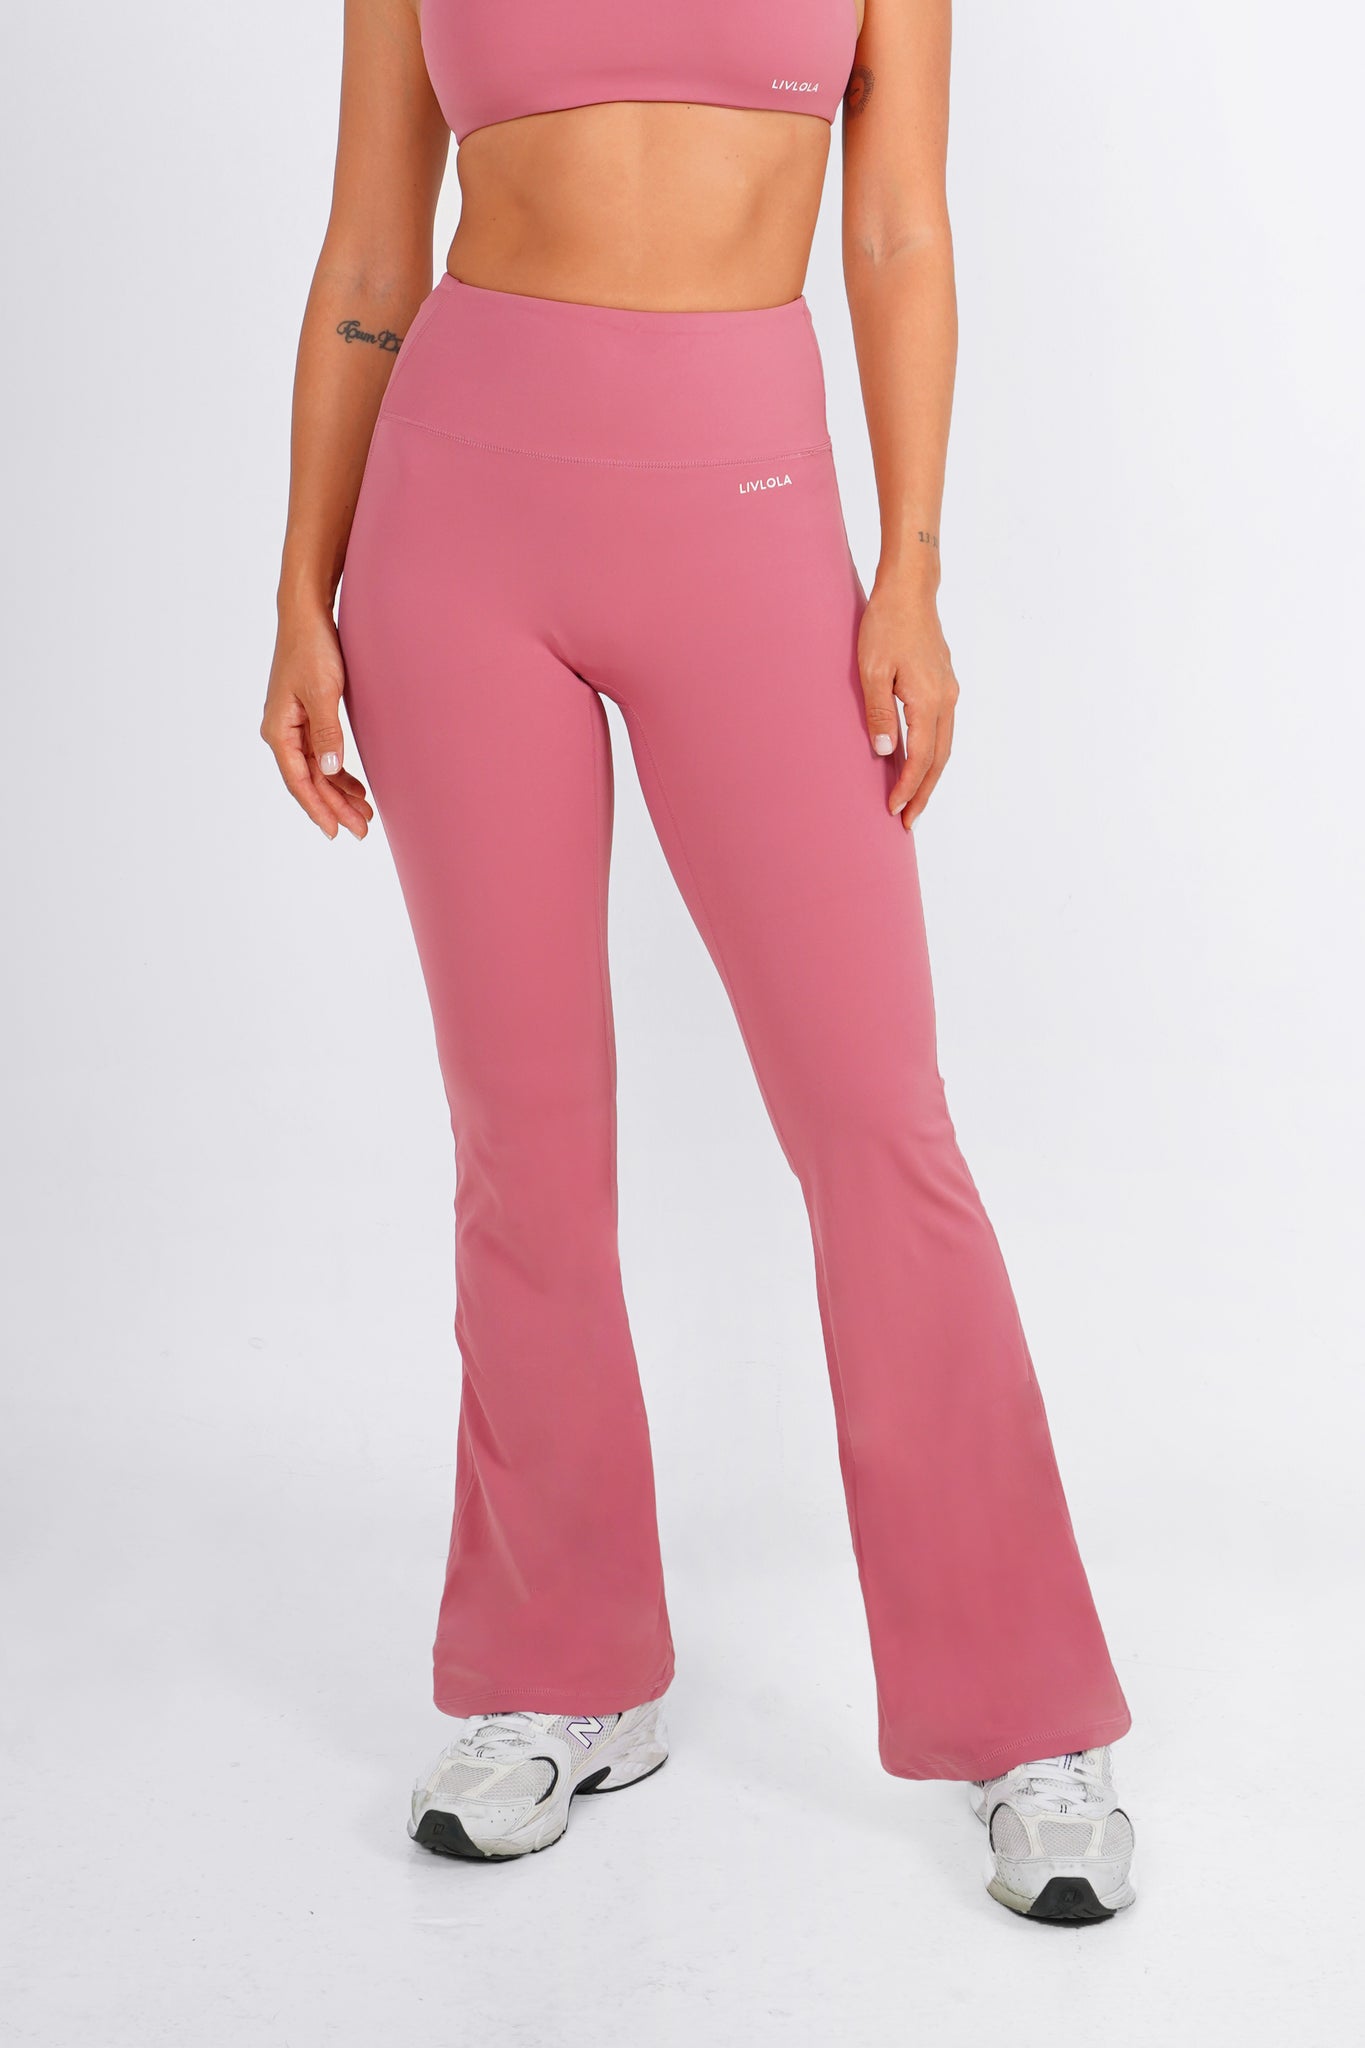 Vogo Athletica Leggings Women's Size Small Pink Stripe Stretch Capri - $13  - From Teresa